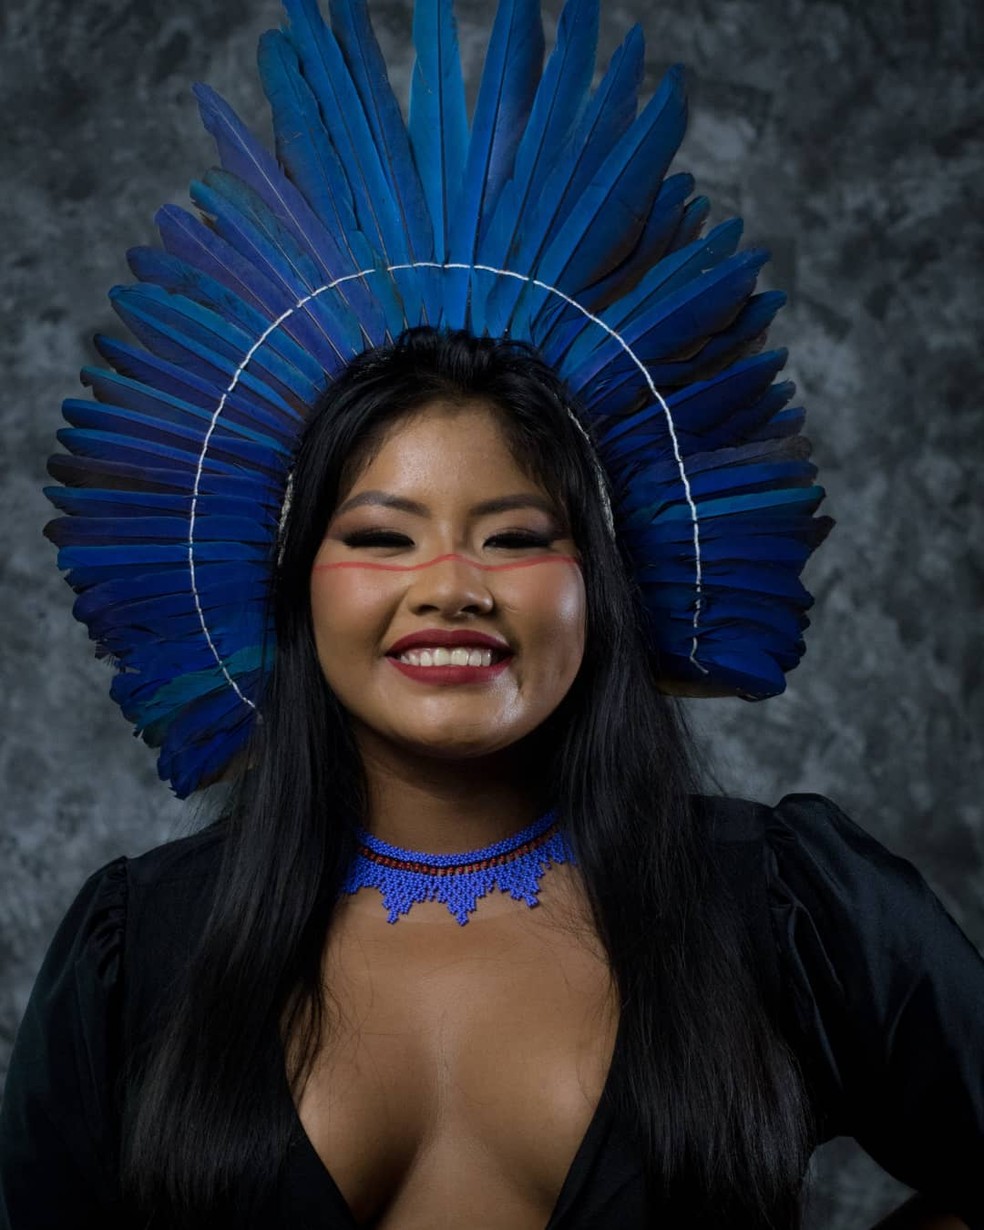 Mari Williams, da etnia Wapichana, foi eleita a primeira Miss Indígena de Roraima — Foto: Reprodução/Facebook/Mari Williams 